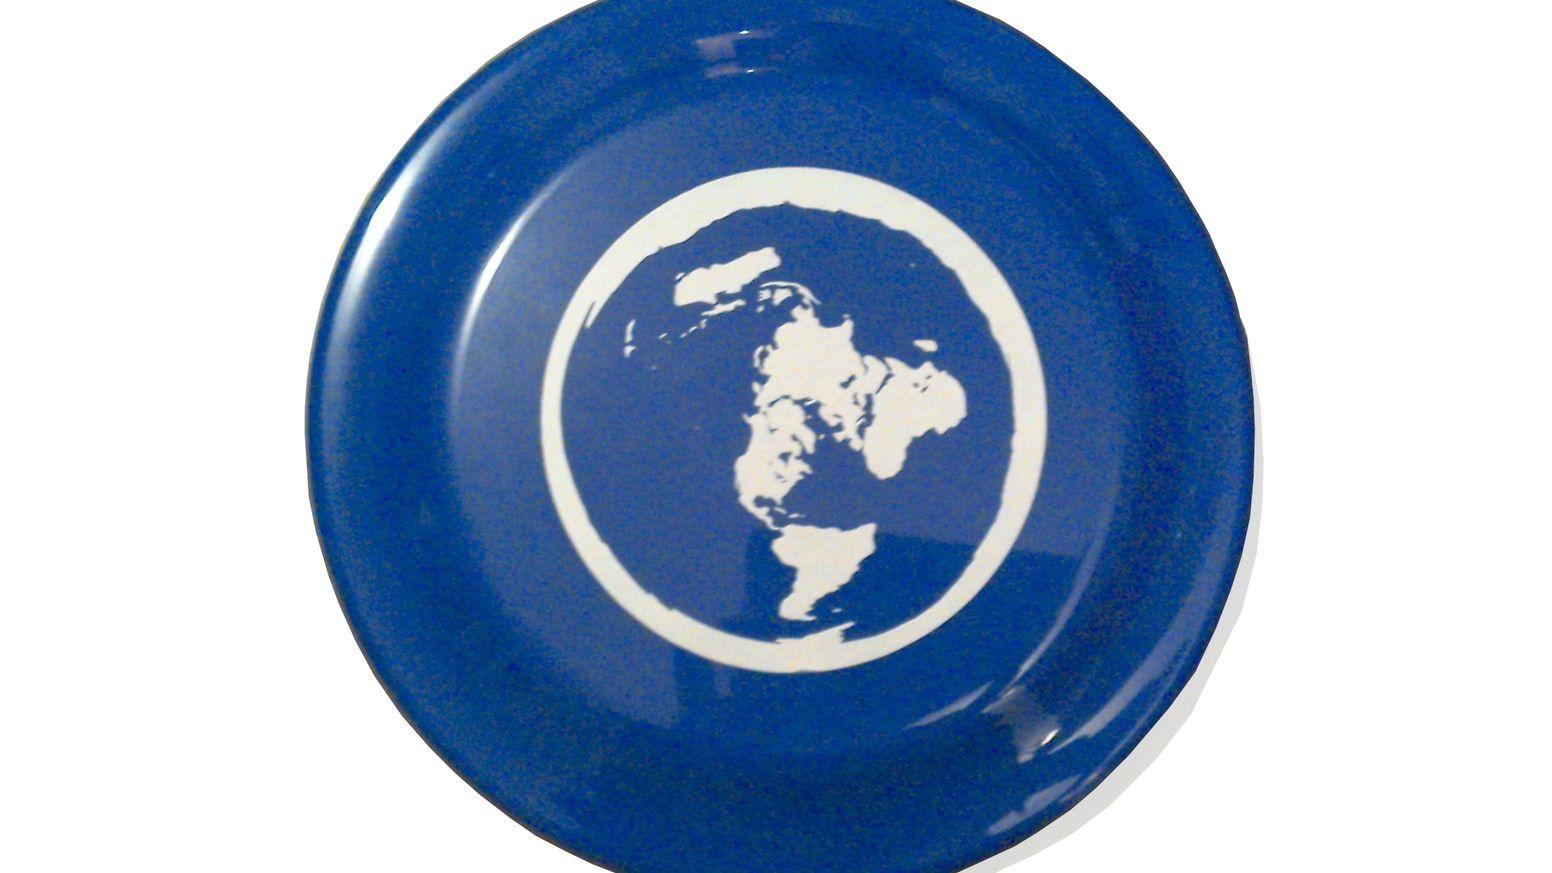 Blue Radar Earth Logo - Flat Earth Frisbee by John Rap Rewards being sent out